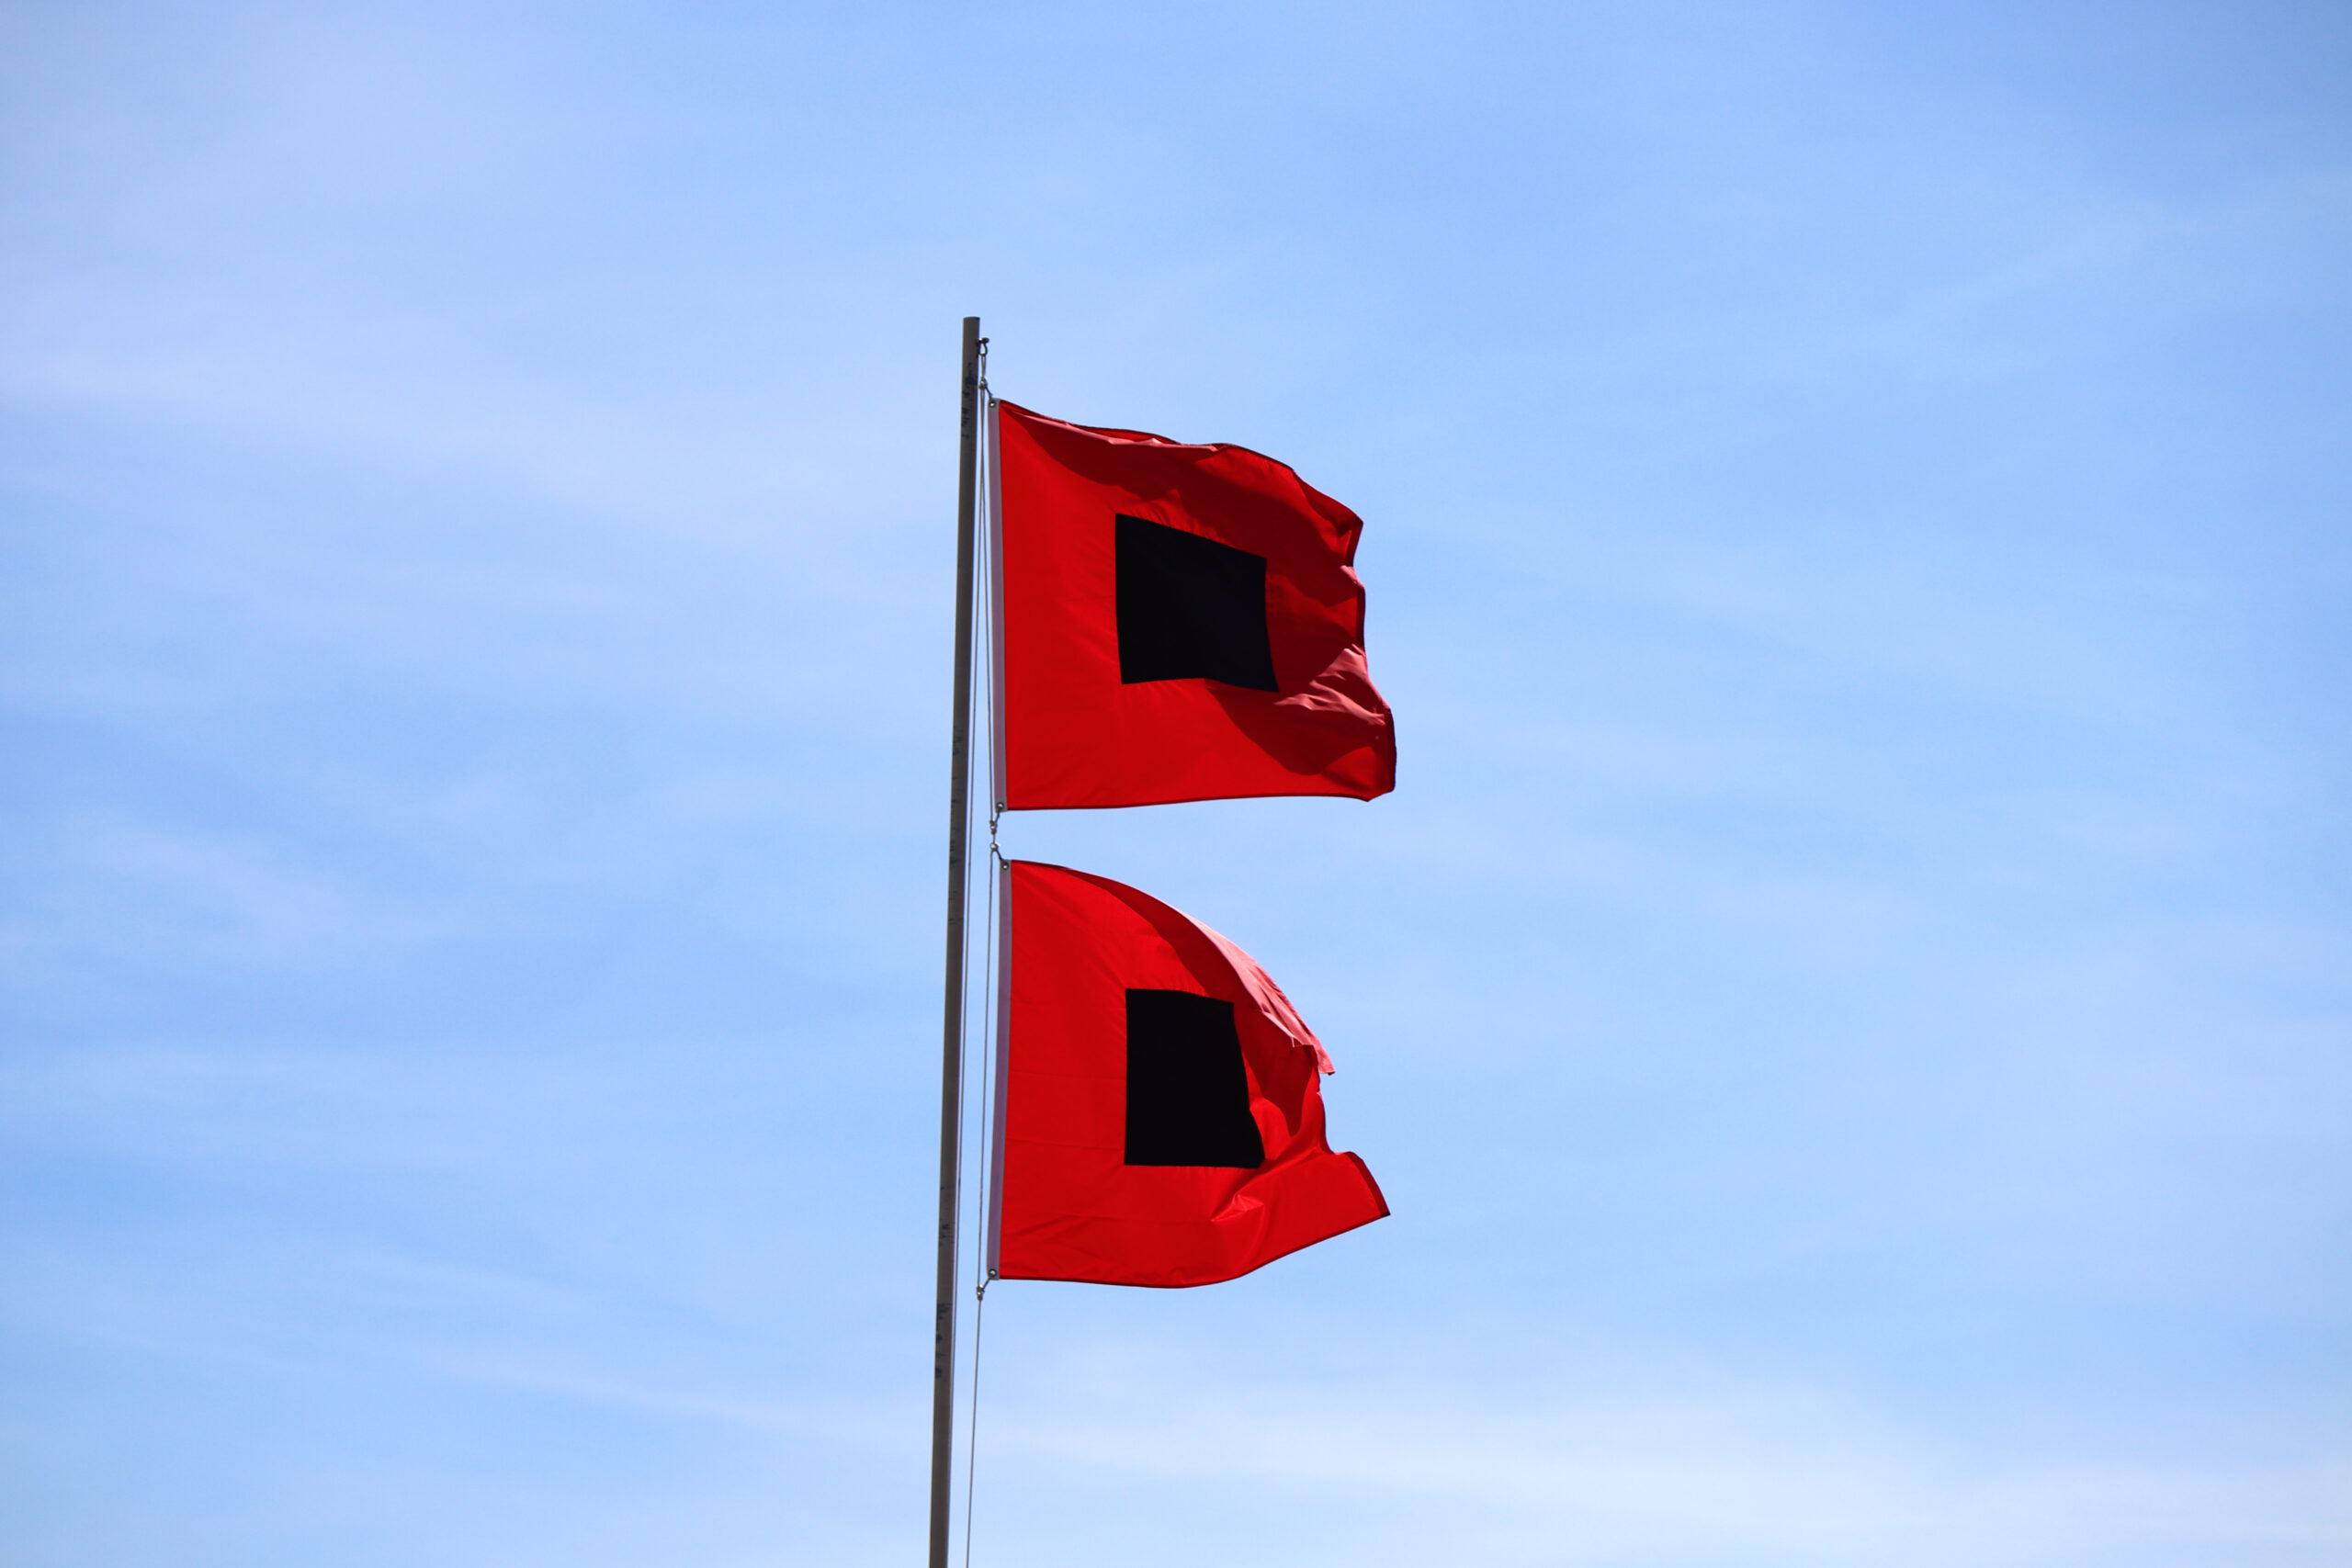 hurricane warning flags flying